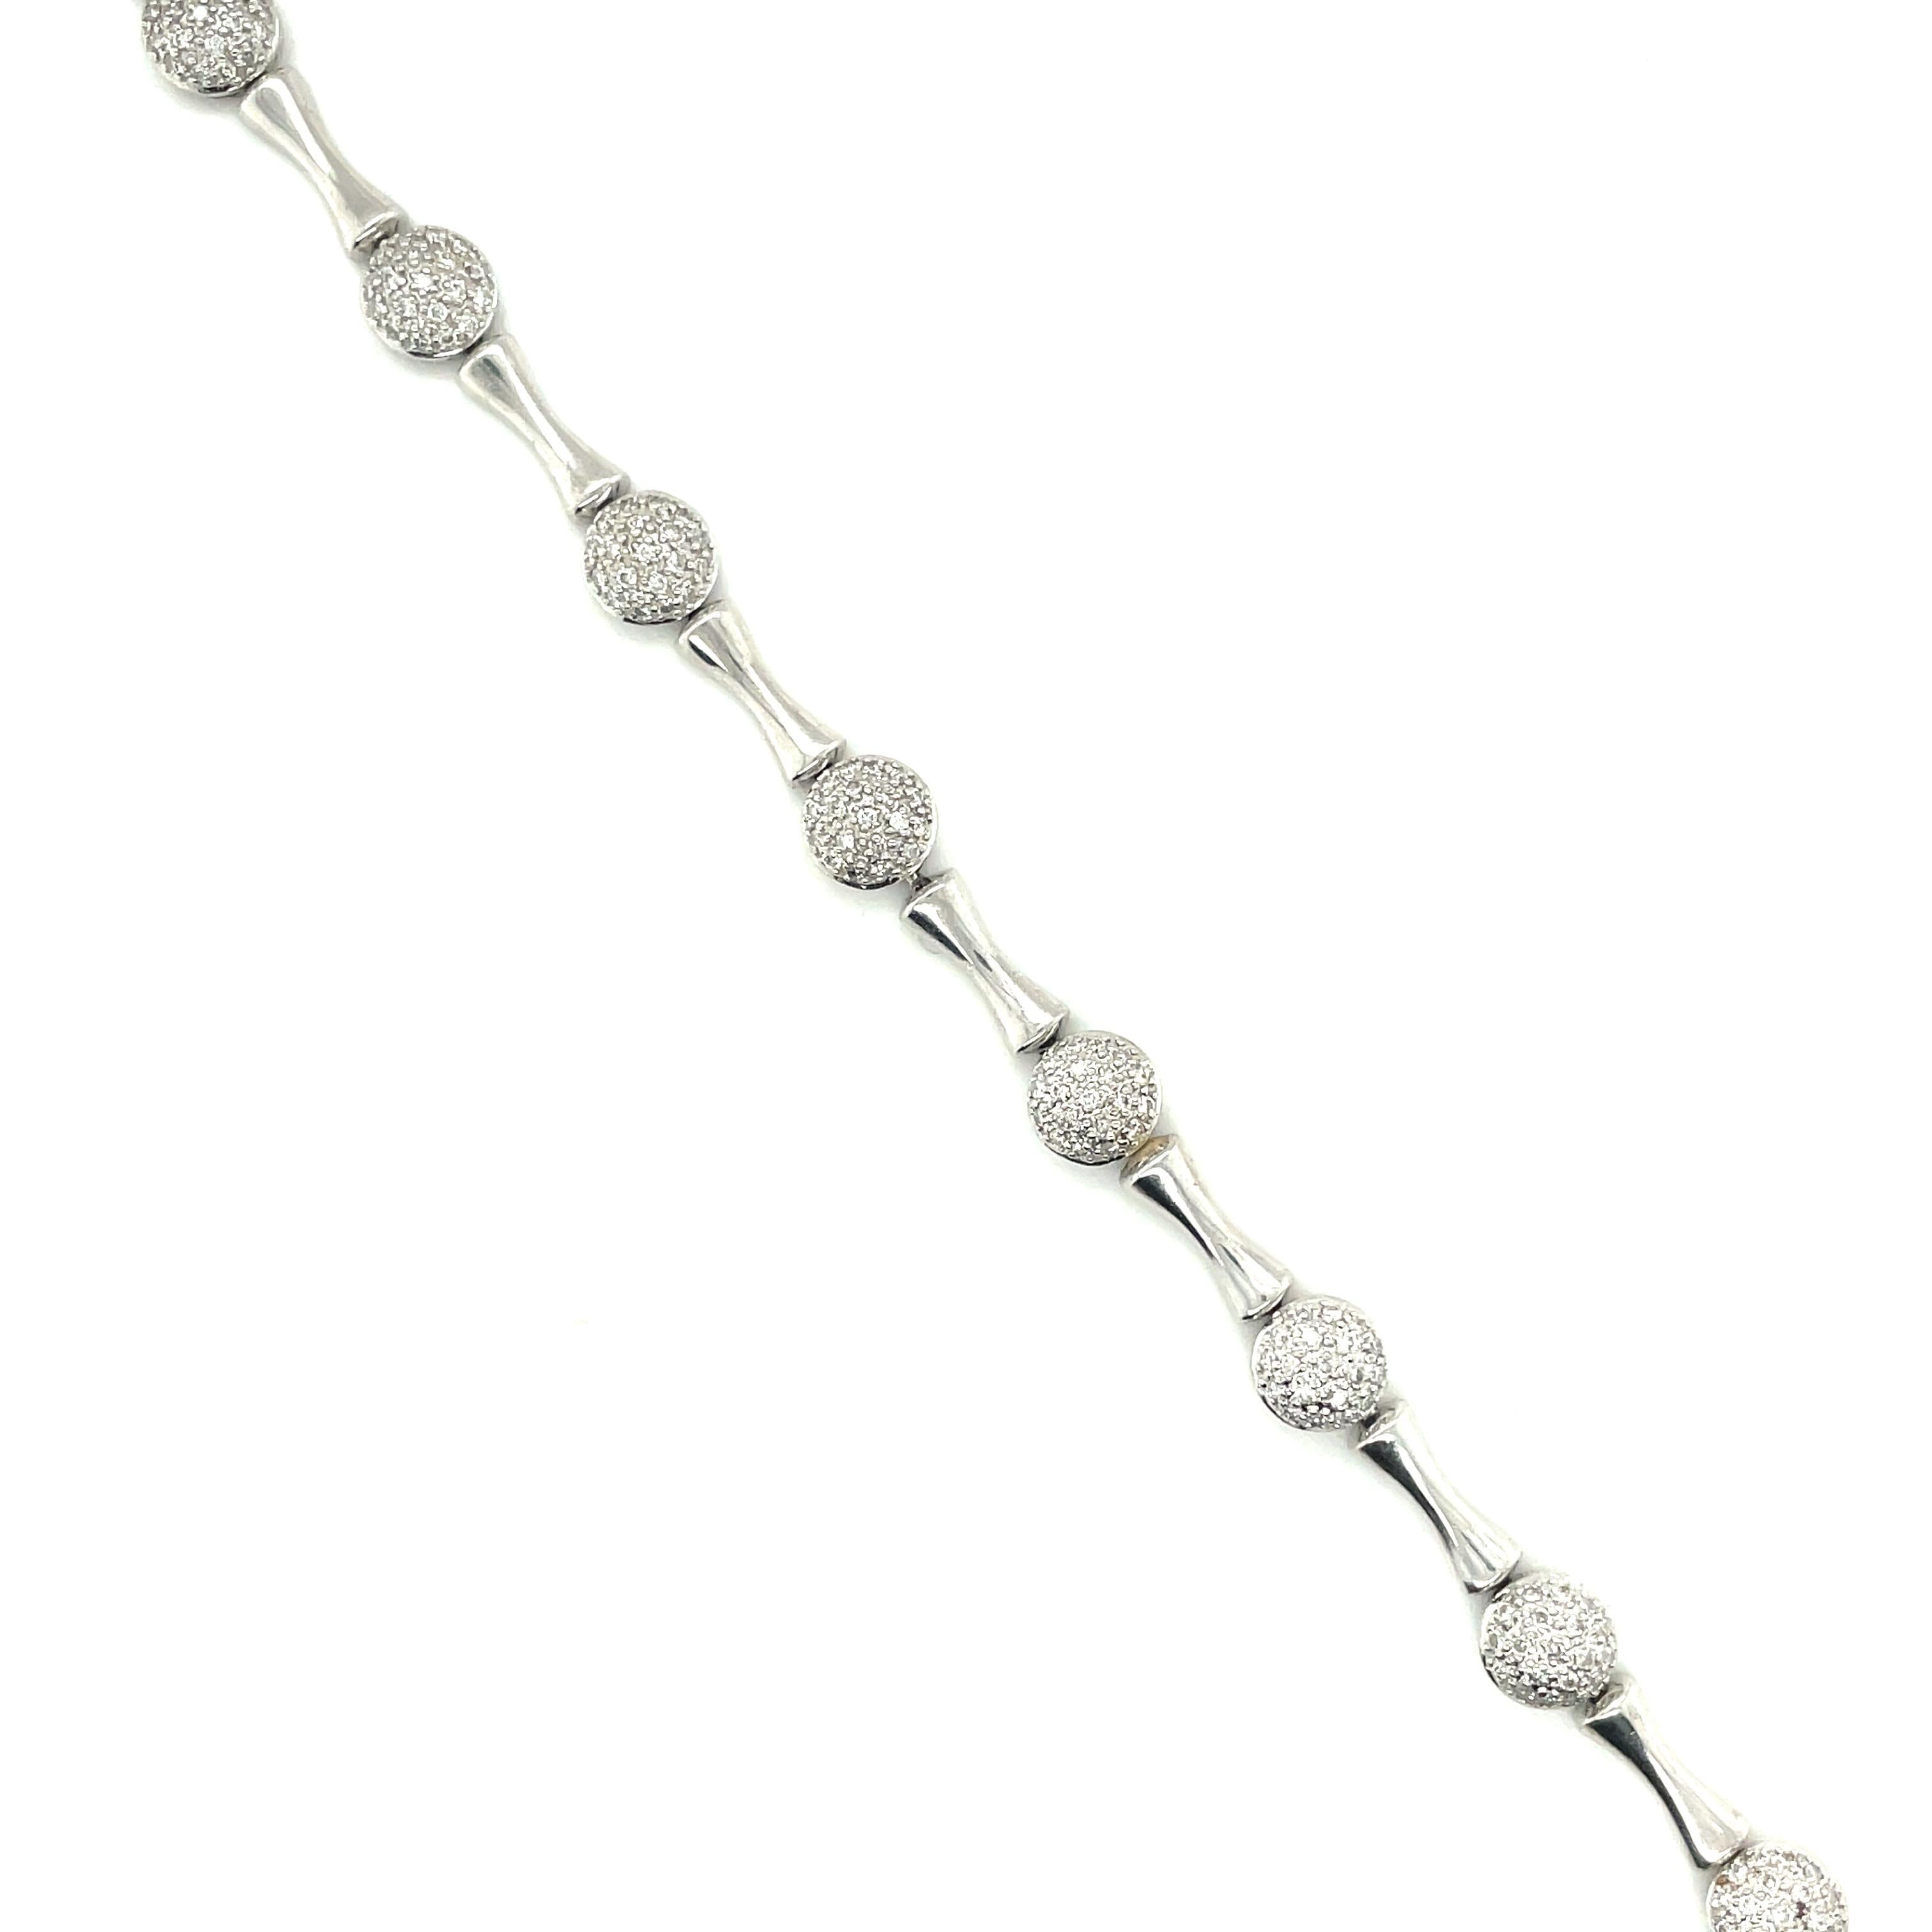 14K White Gold Diamond Pave Link Bracelet

Grams 10.2